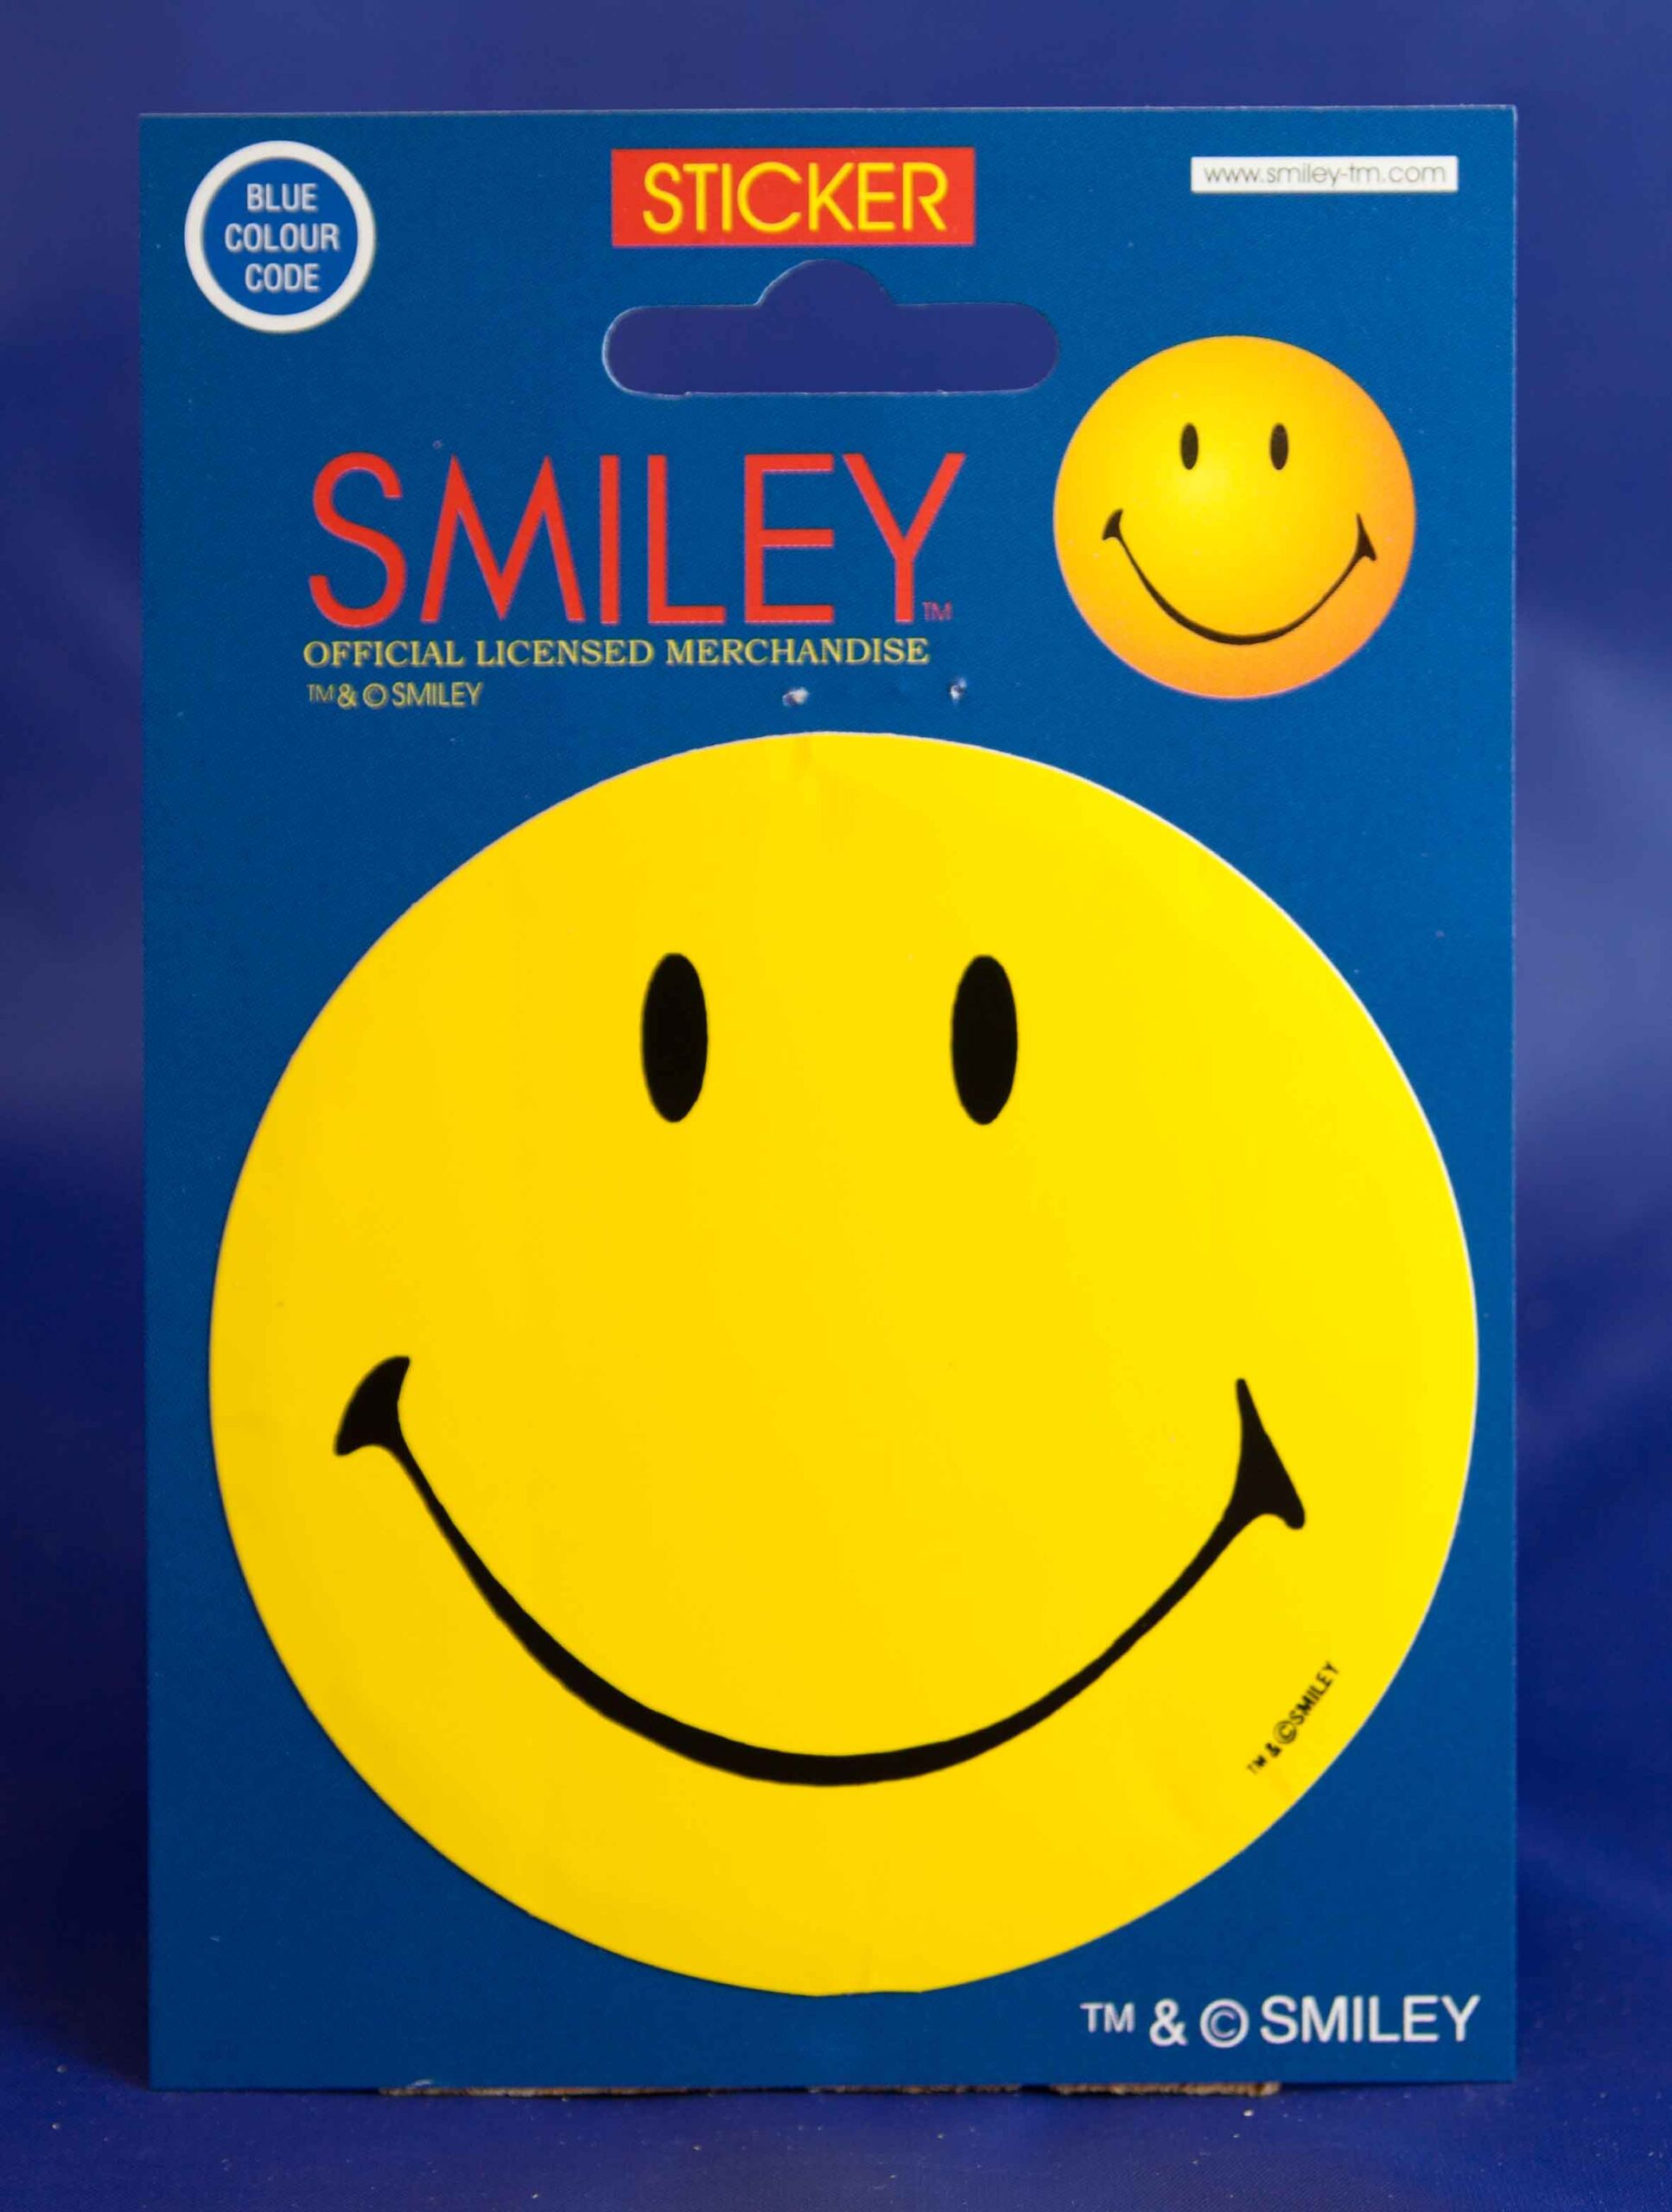 SS1 Classic Smiley Sticker